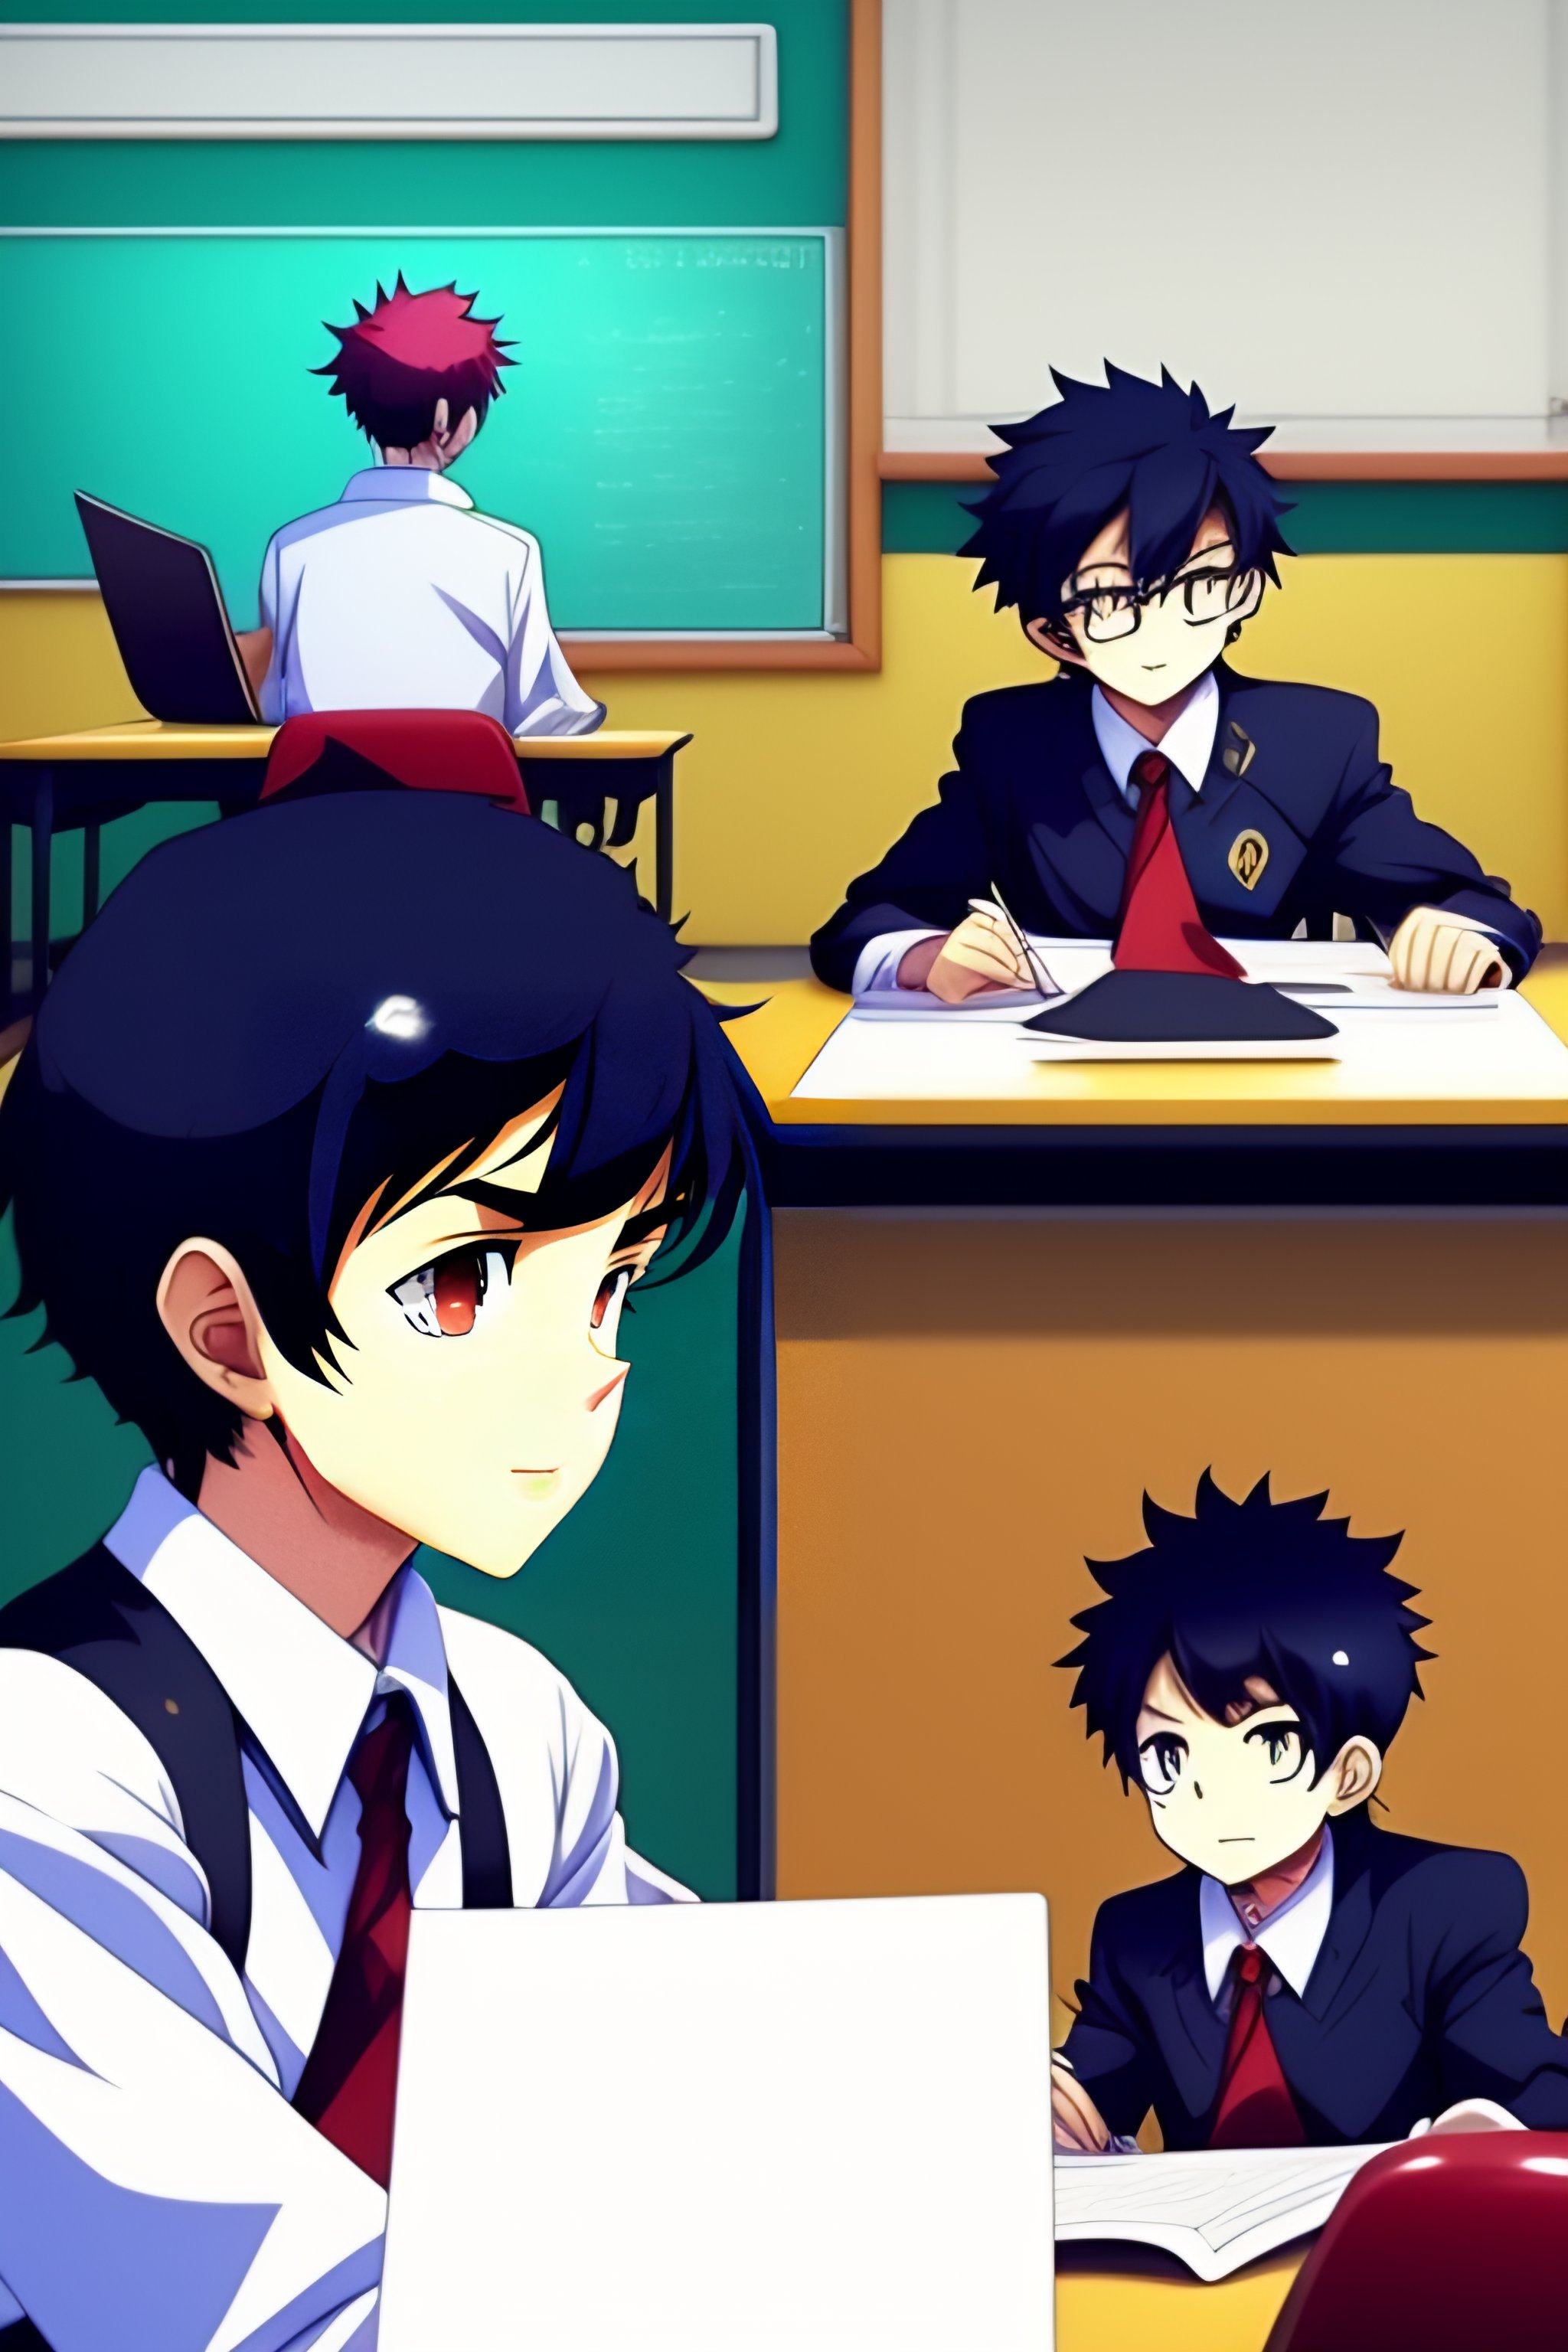 Lexica - A boy who sleeps in the classroom, a senior high school student,  with a anime style